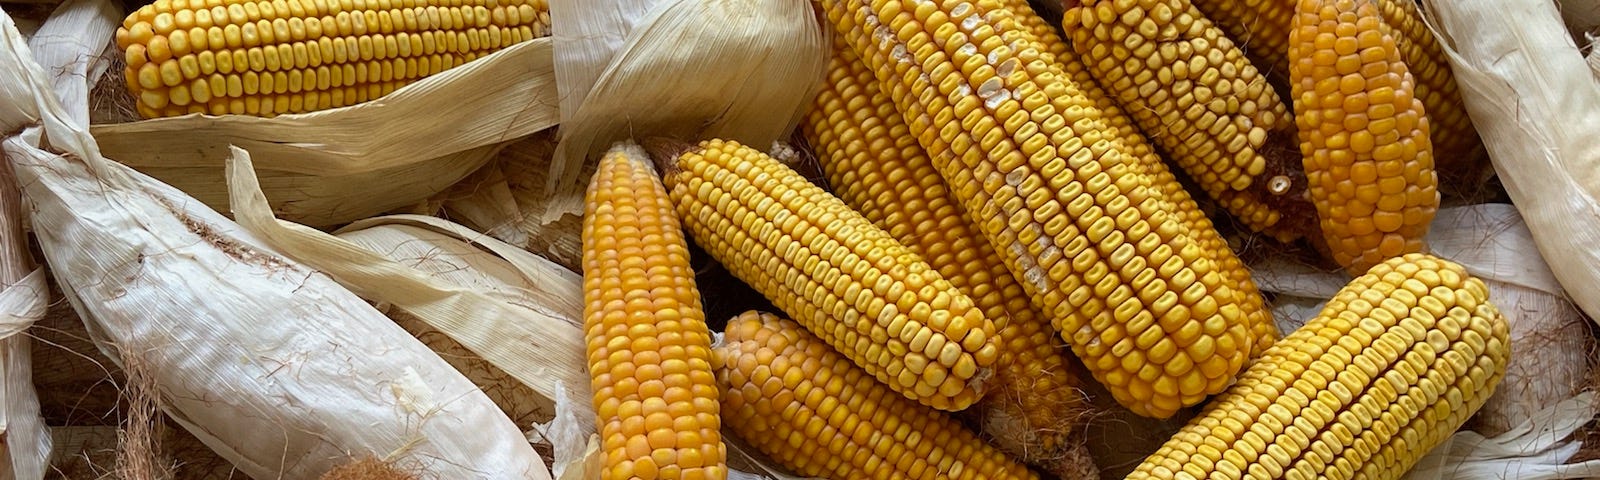 Dried corn on the cob. Yellow corn with light tan husks.